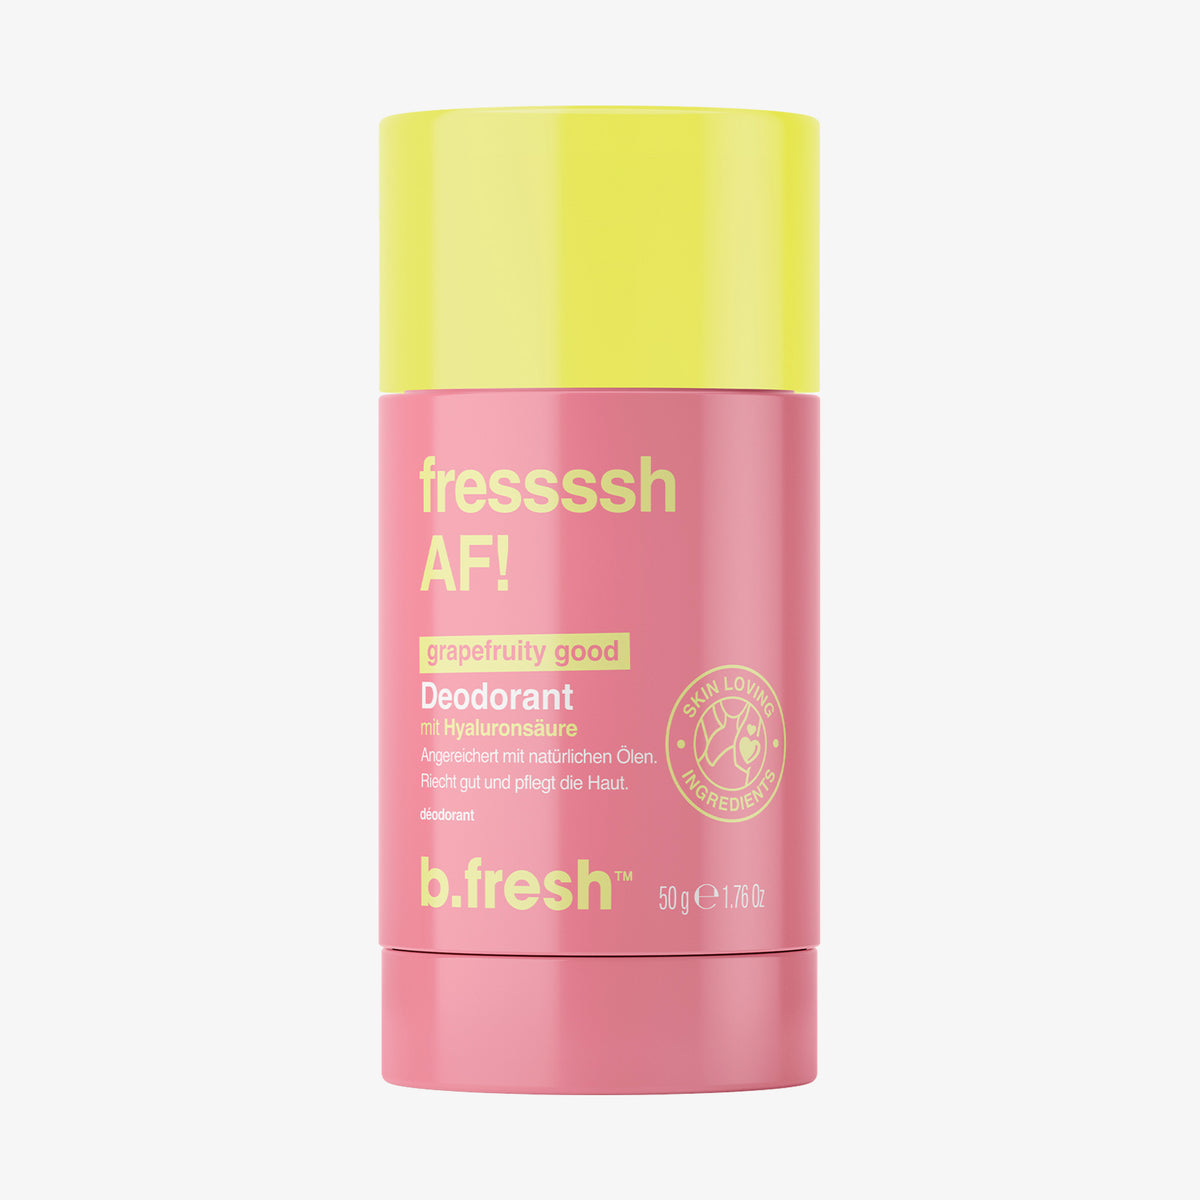 fressssh AF! - deodorant